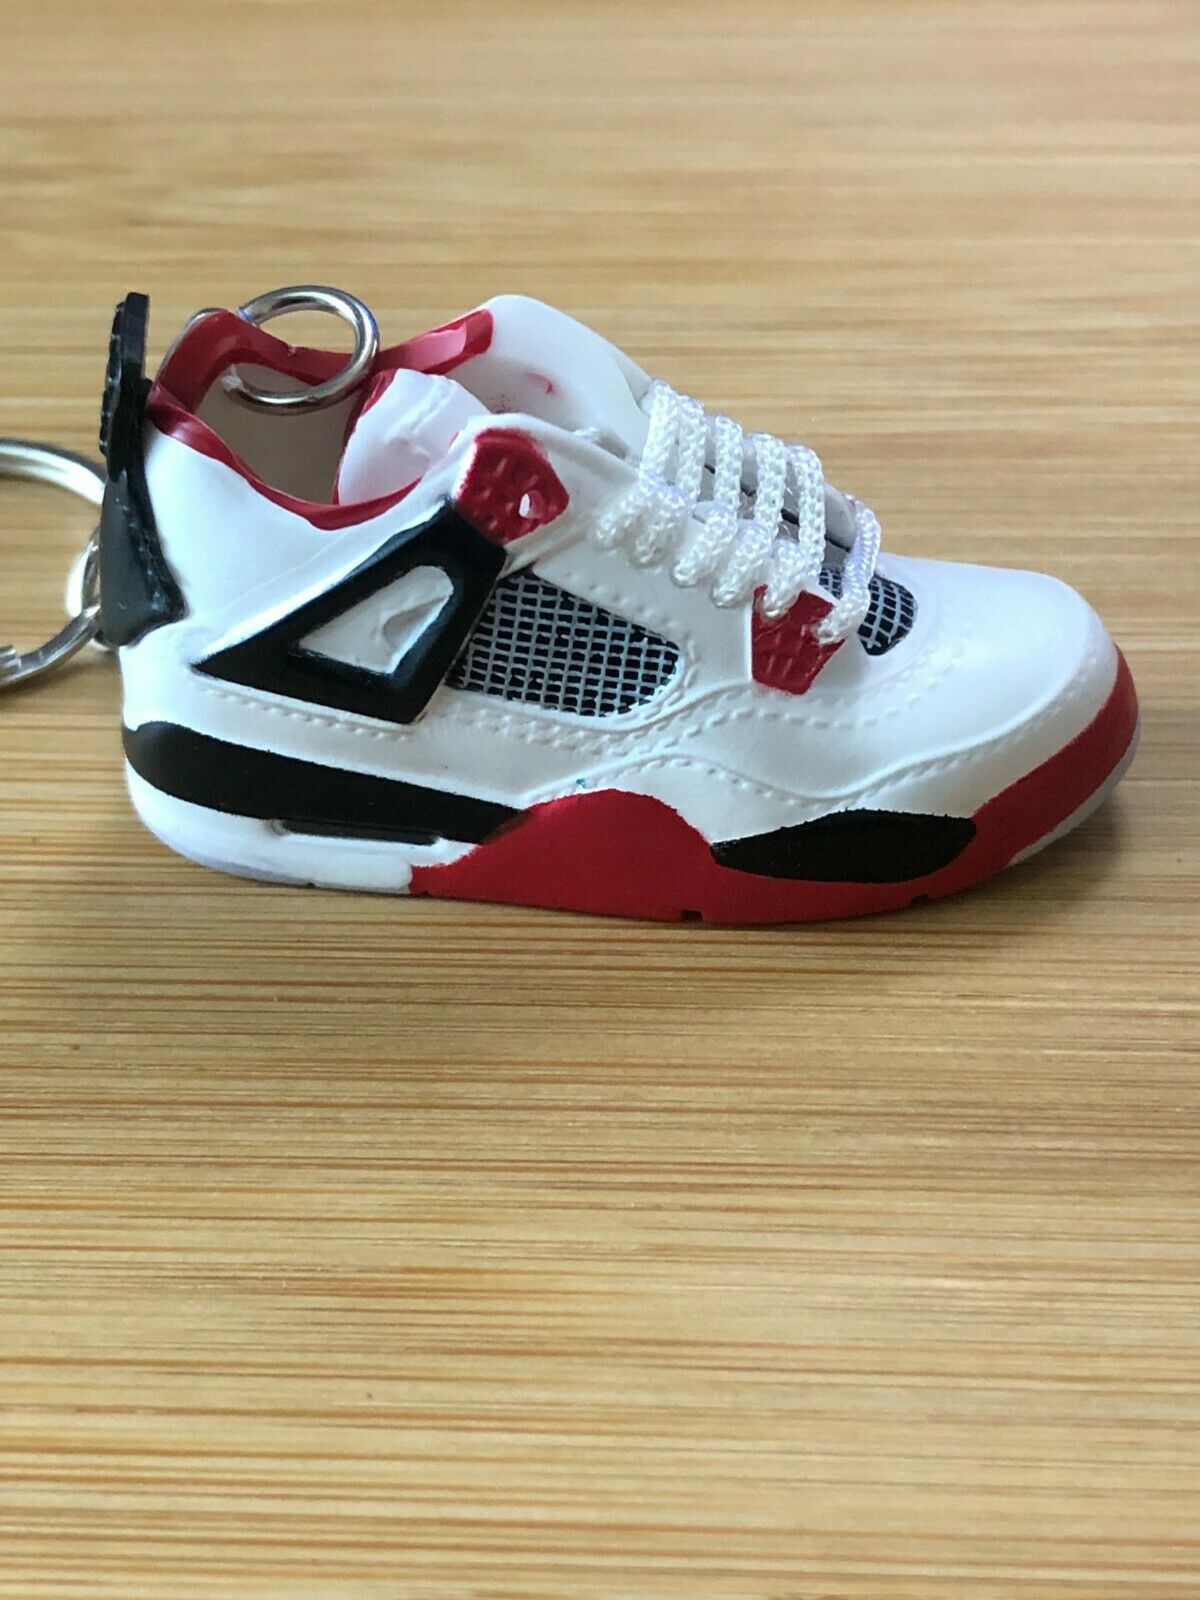 New Mini 3D AIR JORDAN AJIV Nike sneaker shoe keychain White/Black/Red